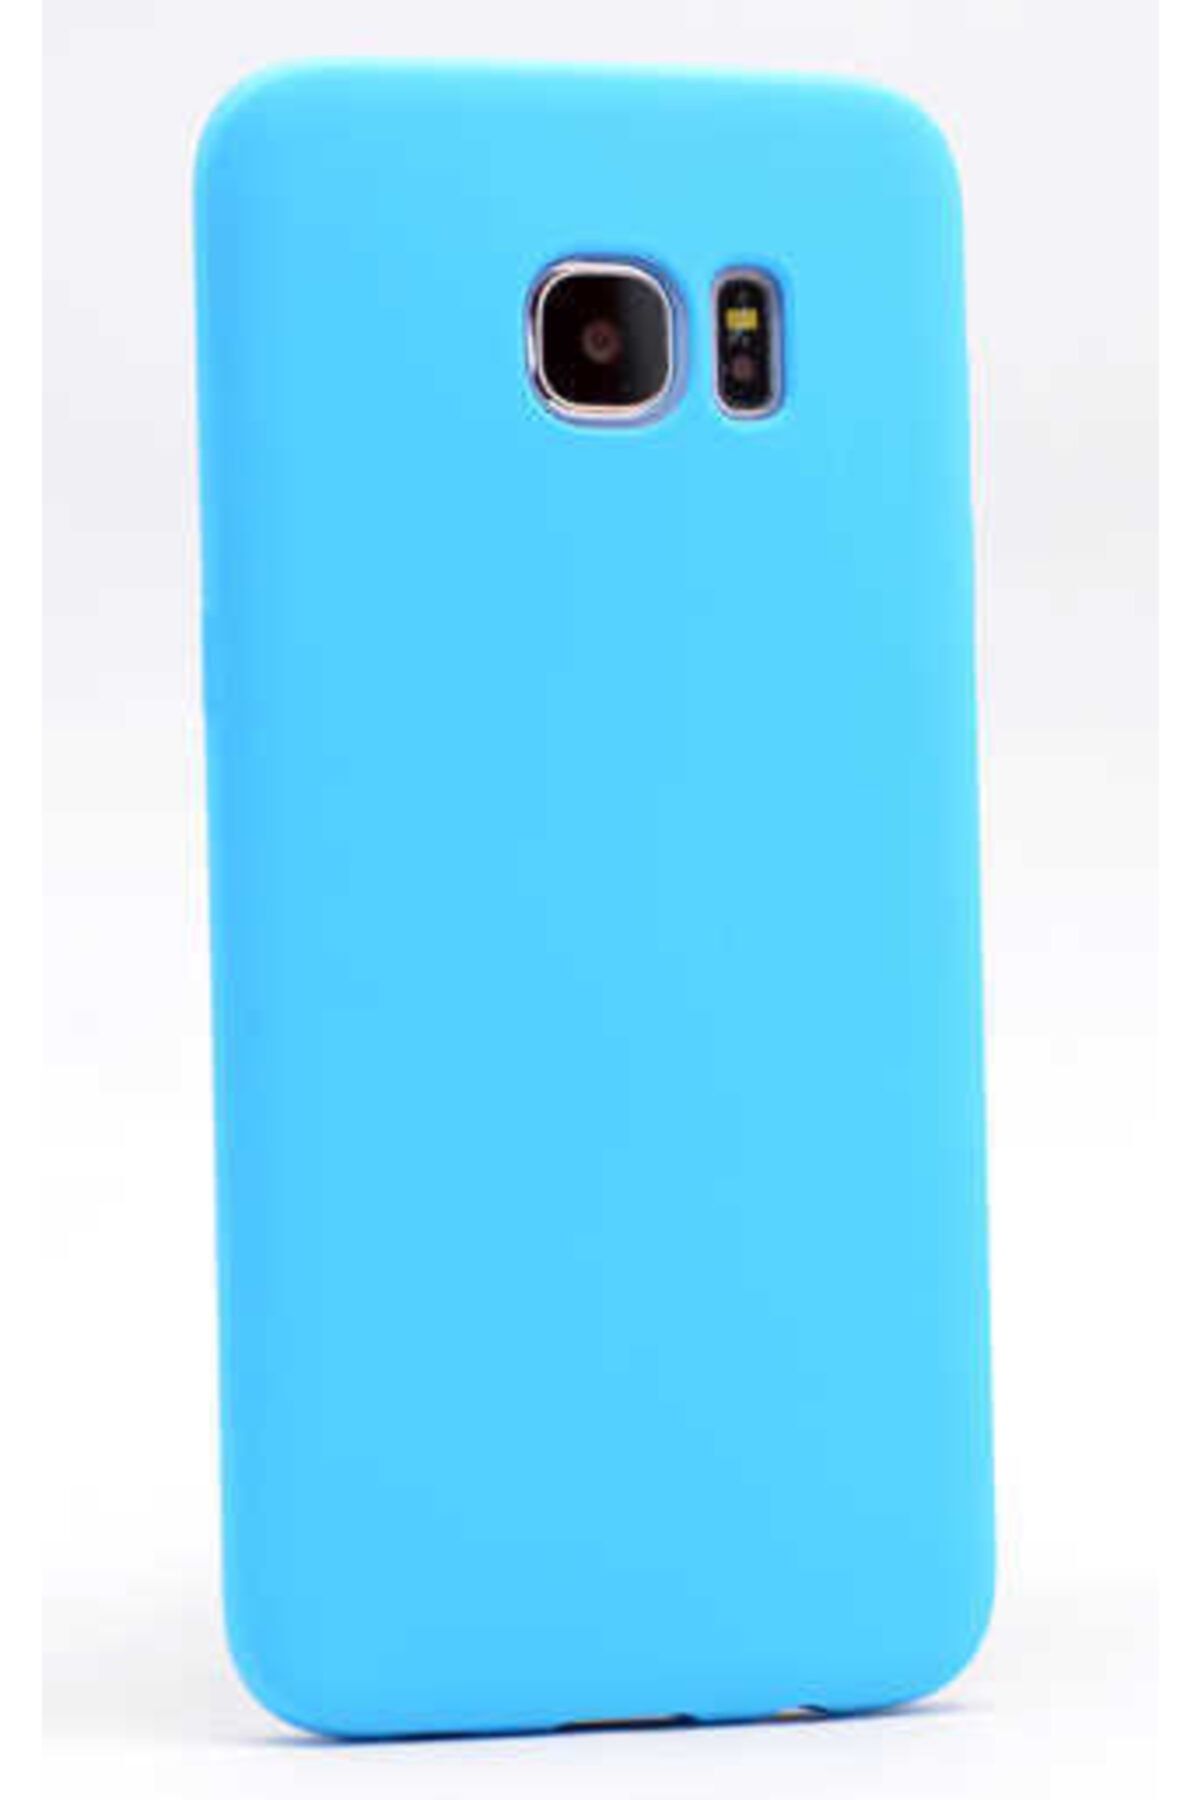 İncisoft Galaxy Note 5 Uyumlu Ince Yumuşak Soft Tasarım Renkli Silikon Kılıf